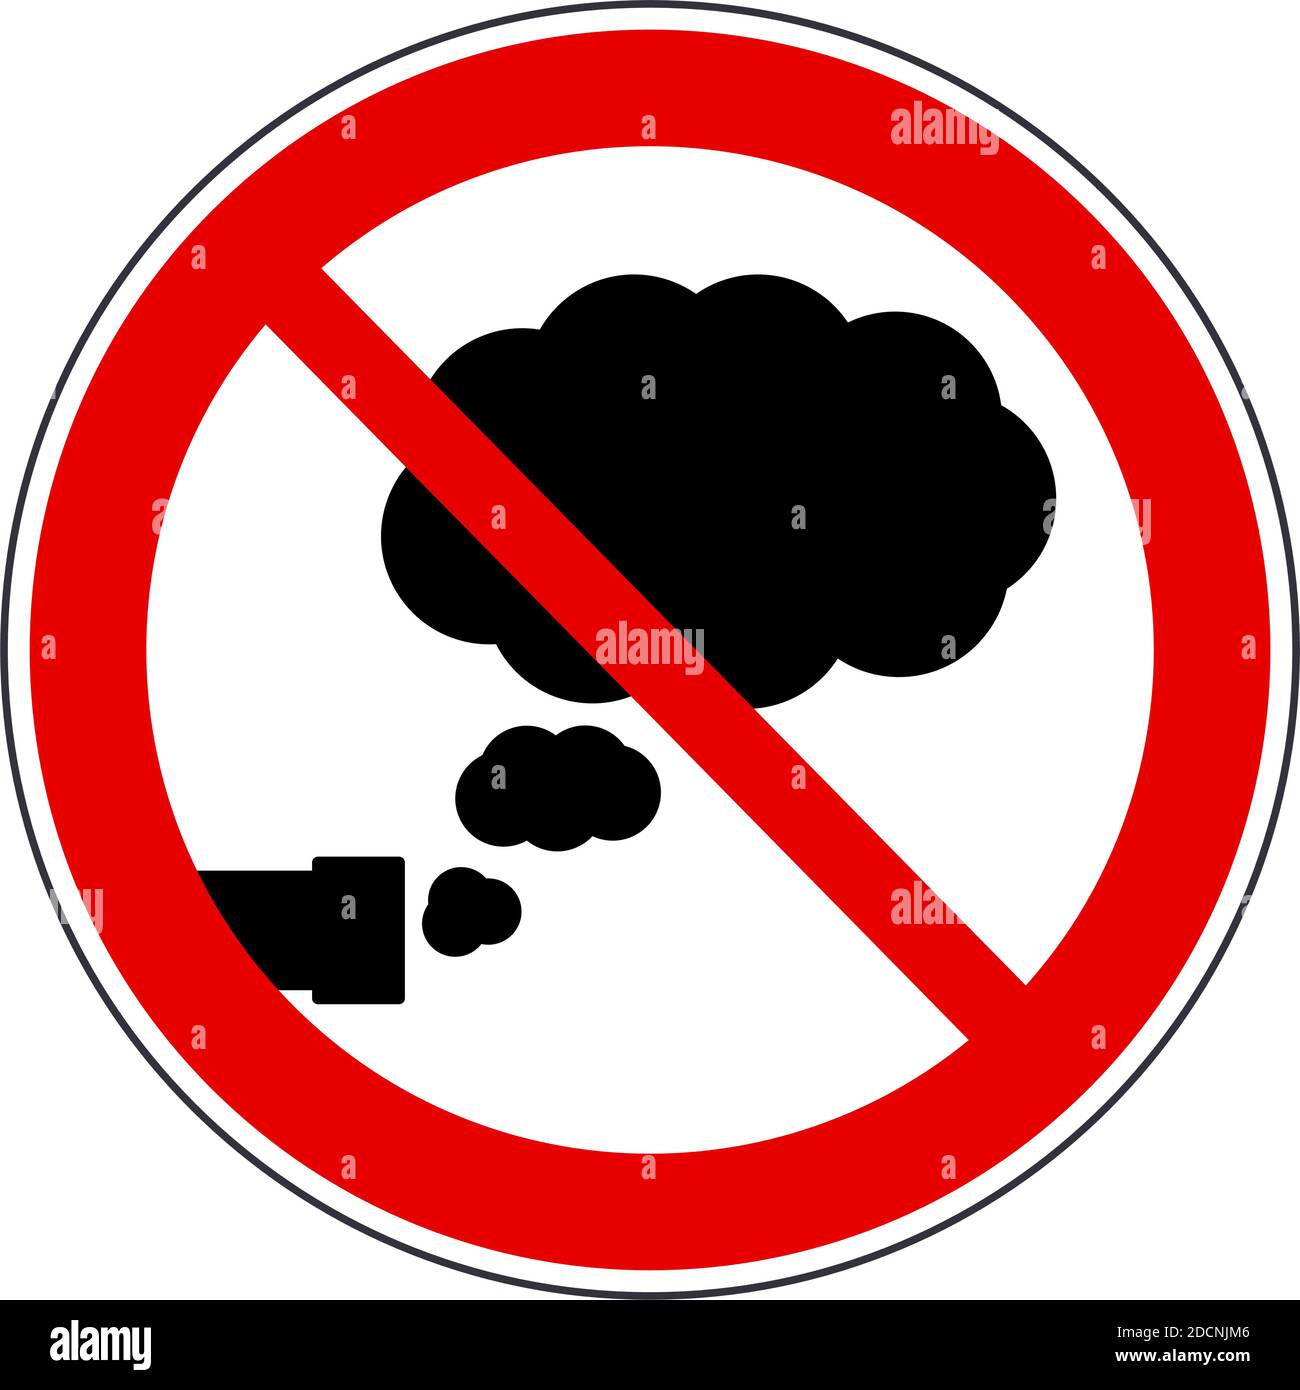 Car exhaust smog pollution cloud ban or forbidden sign or symbol vector illustration Stock Vector